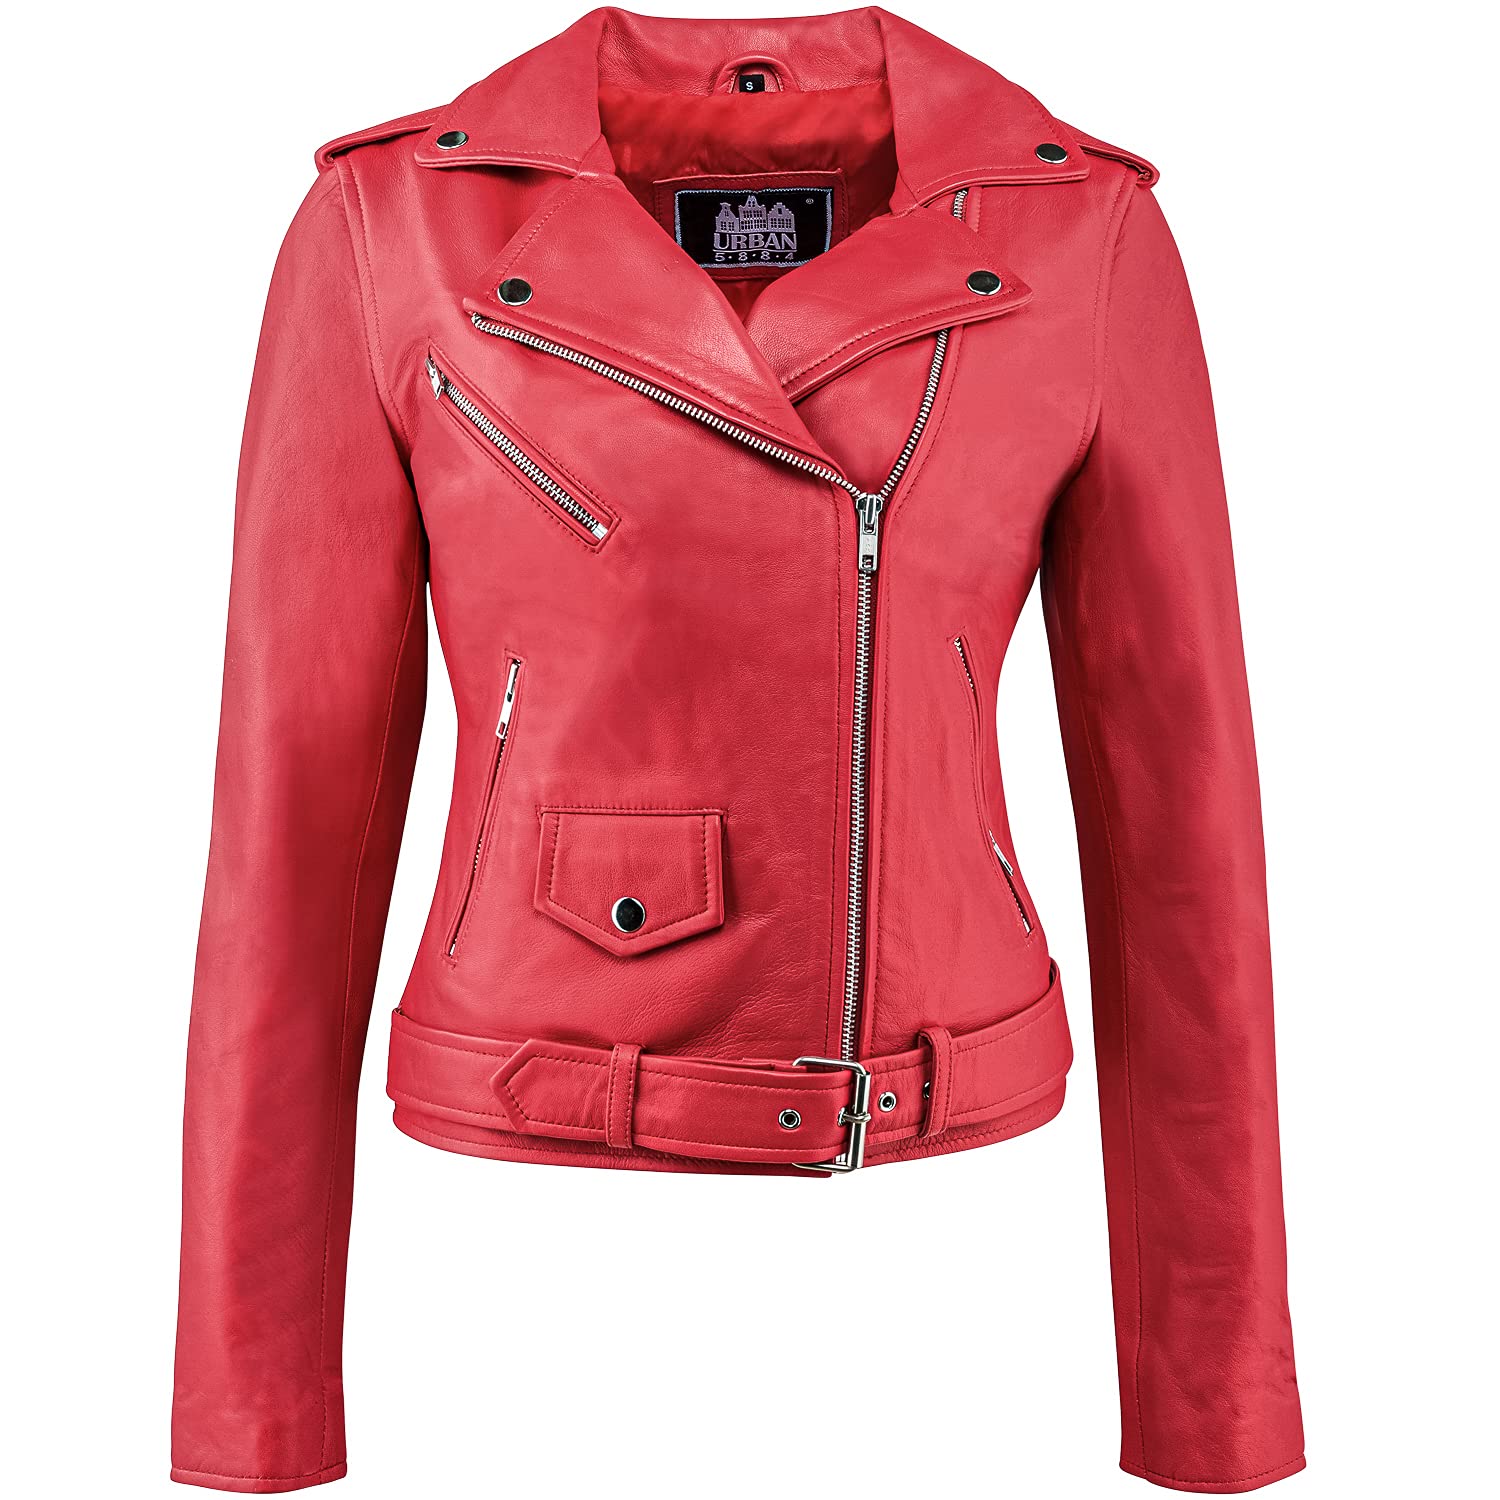 Urban Leather Perfecto Retro Damen Lederjacke Rot Lamm-Nappa, Red, Größe 2XL - 46, UR-196 von Urban Leather